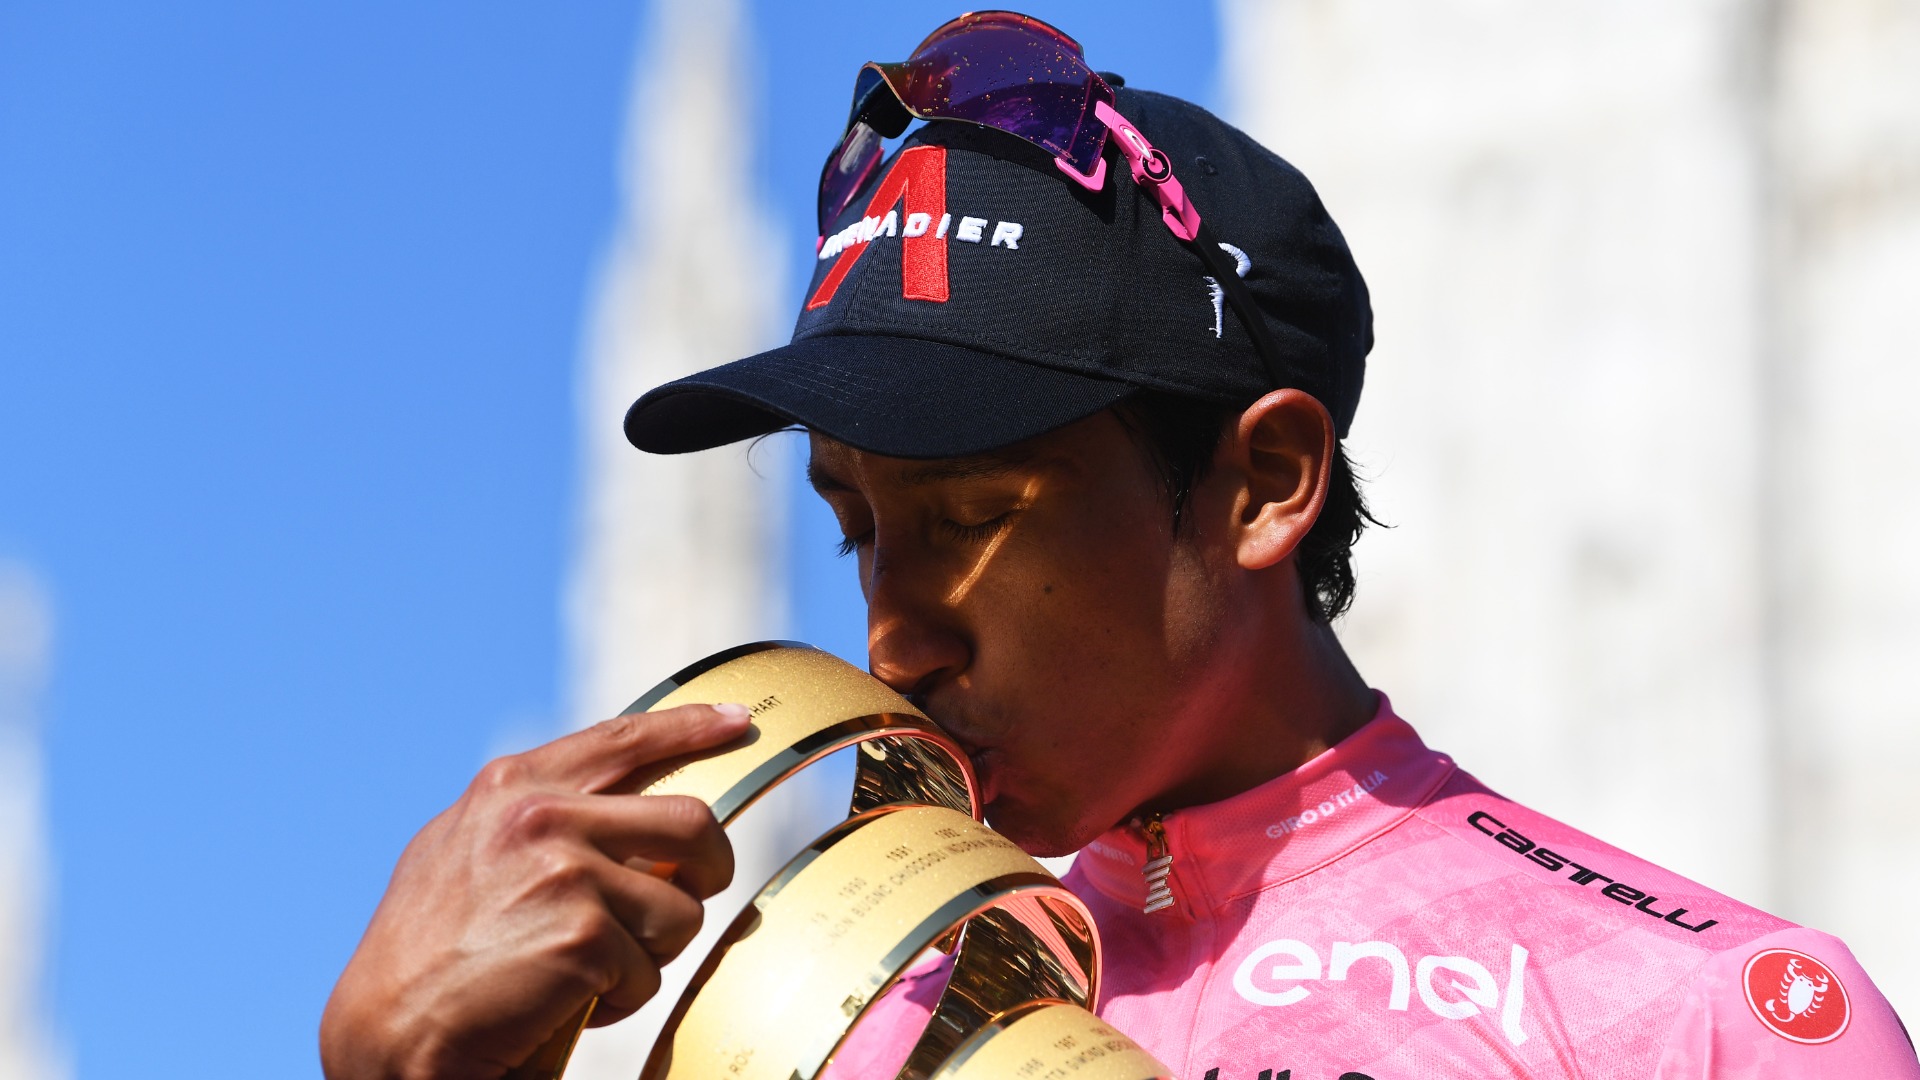 New Giro d'Italia champion Egan Bernal has set his sights on winning the Vuelta a Espana after his second Grand Tour triumph.